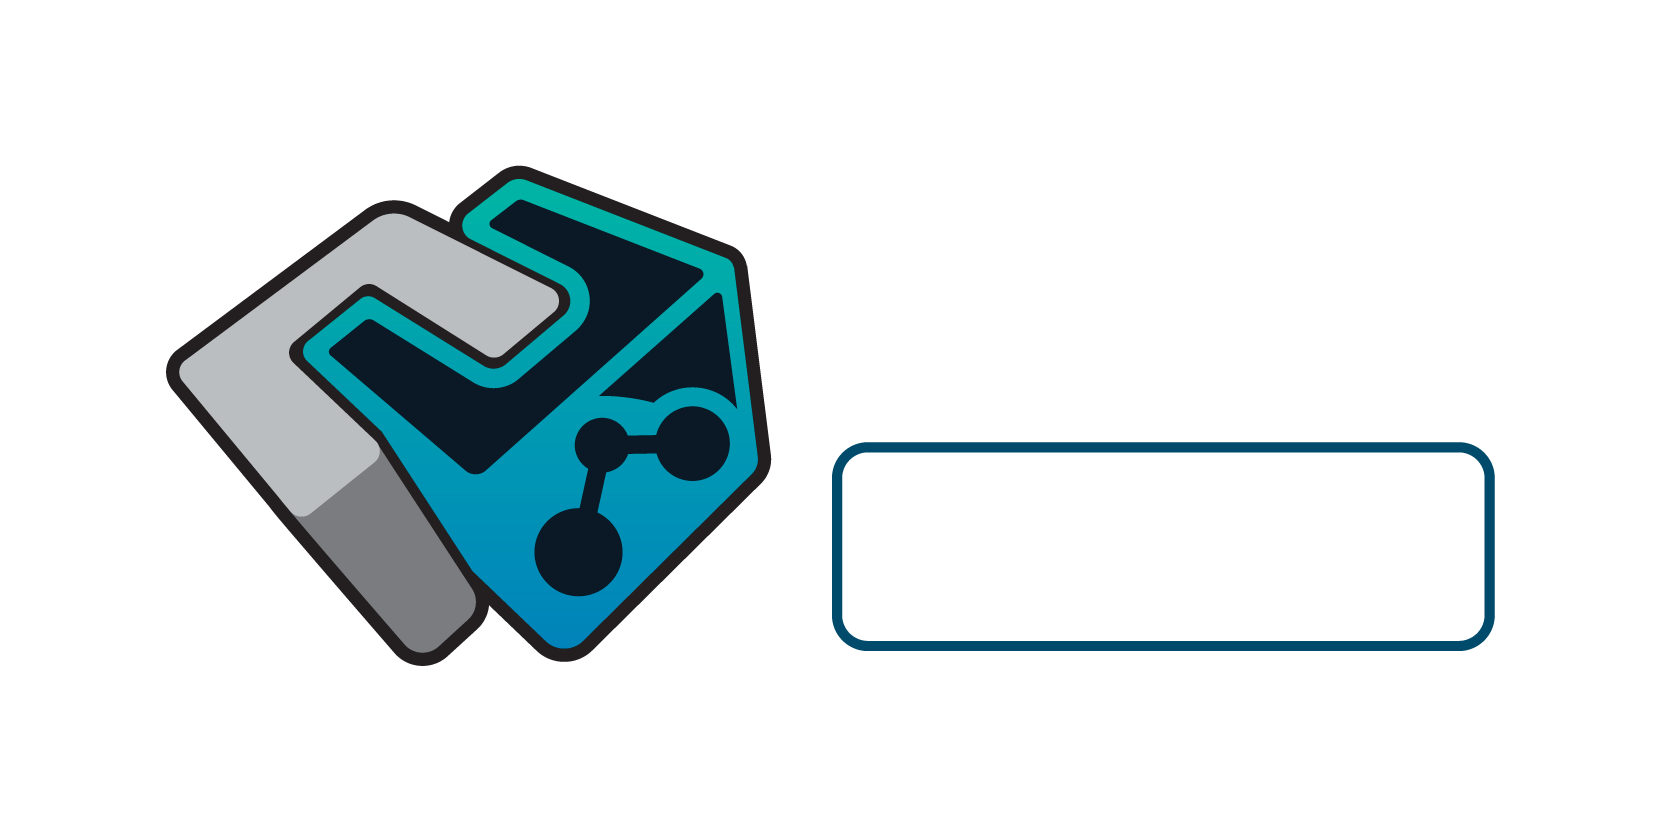 logo_vts_perform_dark.png (59 KB)